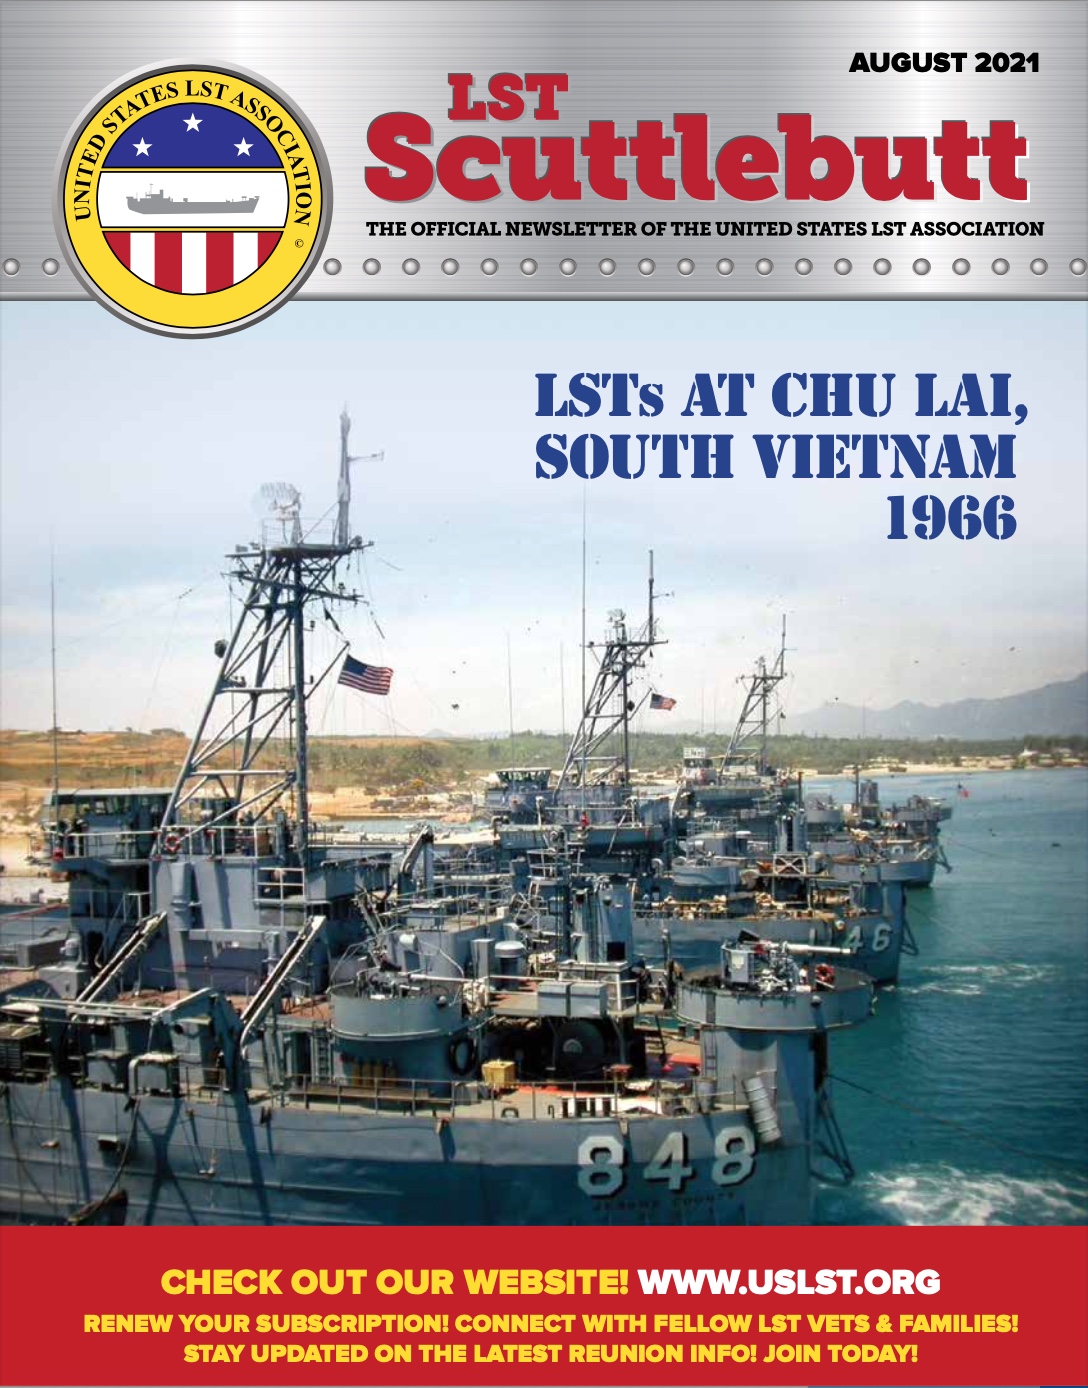 Scuttlebutt Issue 28 AUGUST 2021 COVER